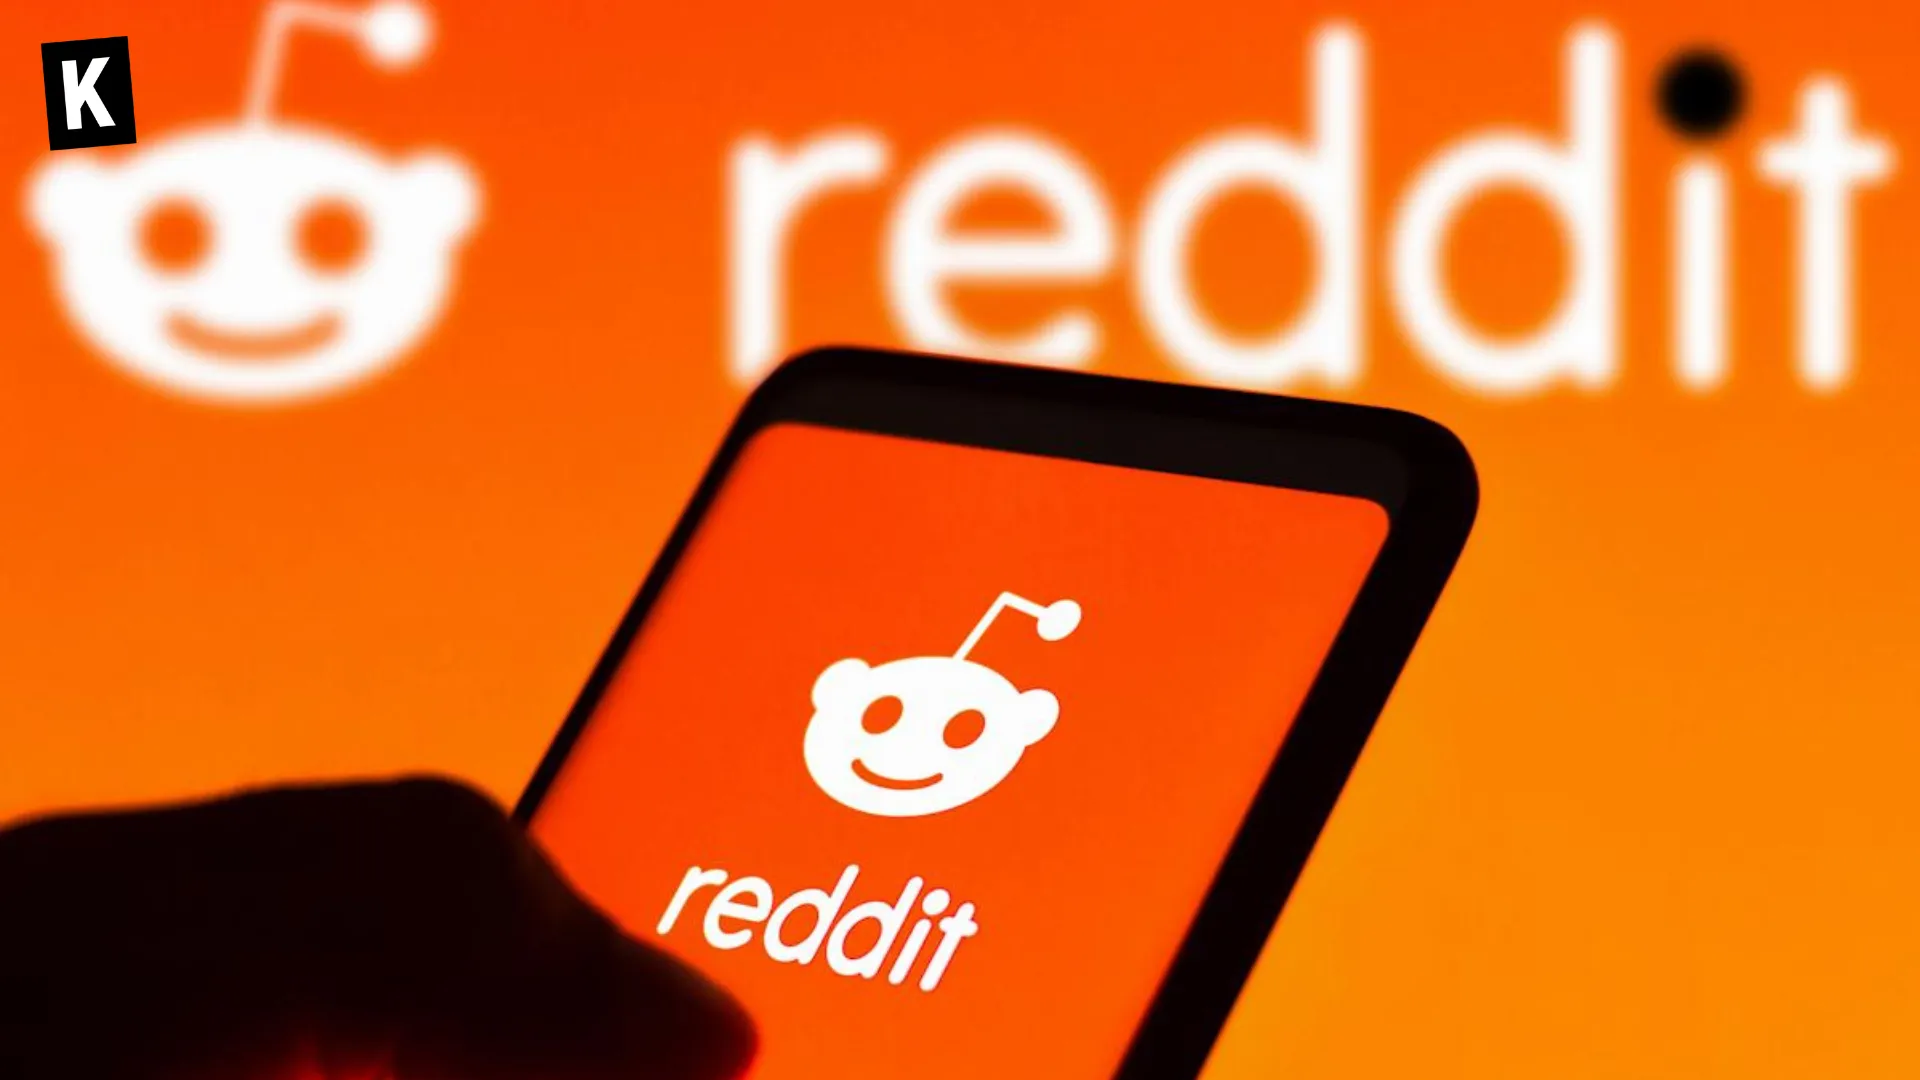 Reddit logo on phone